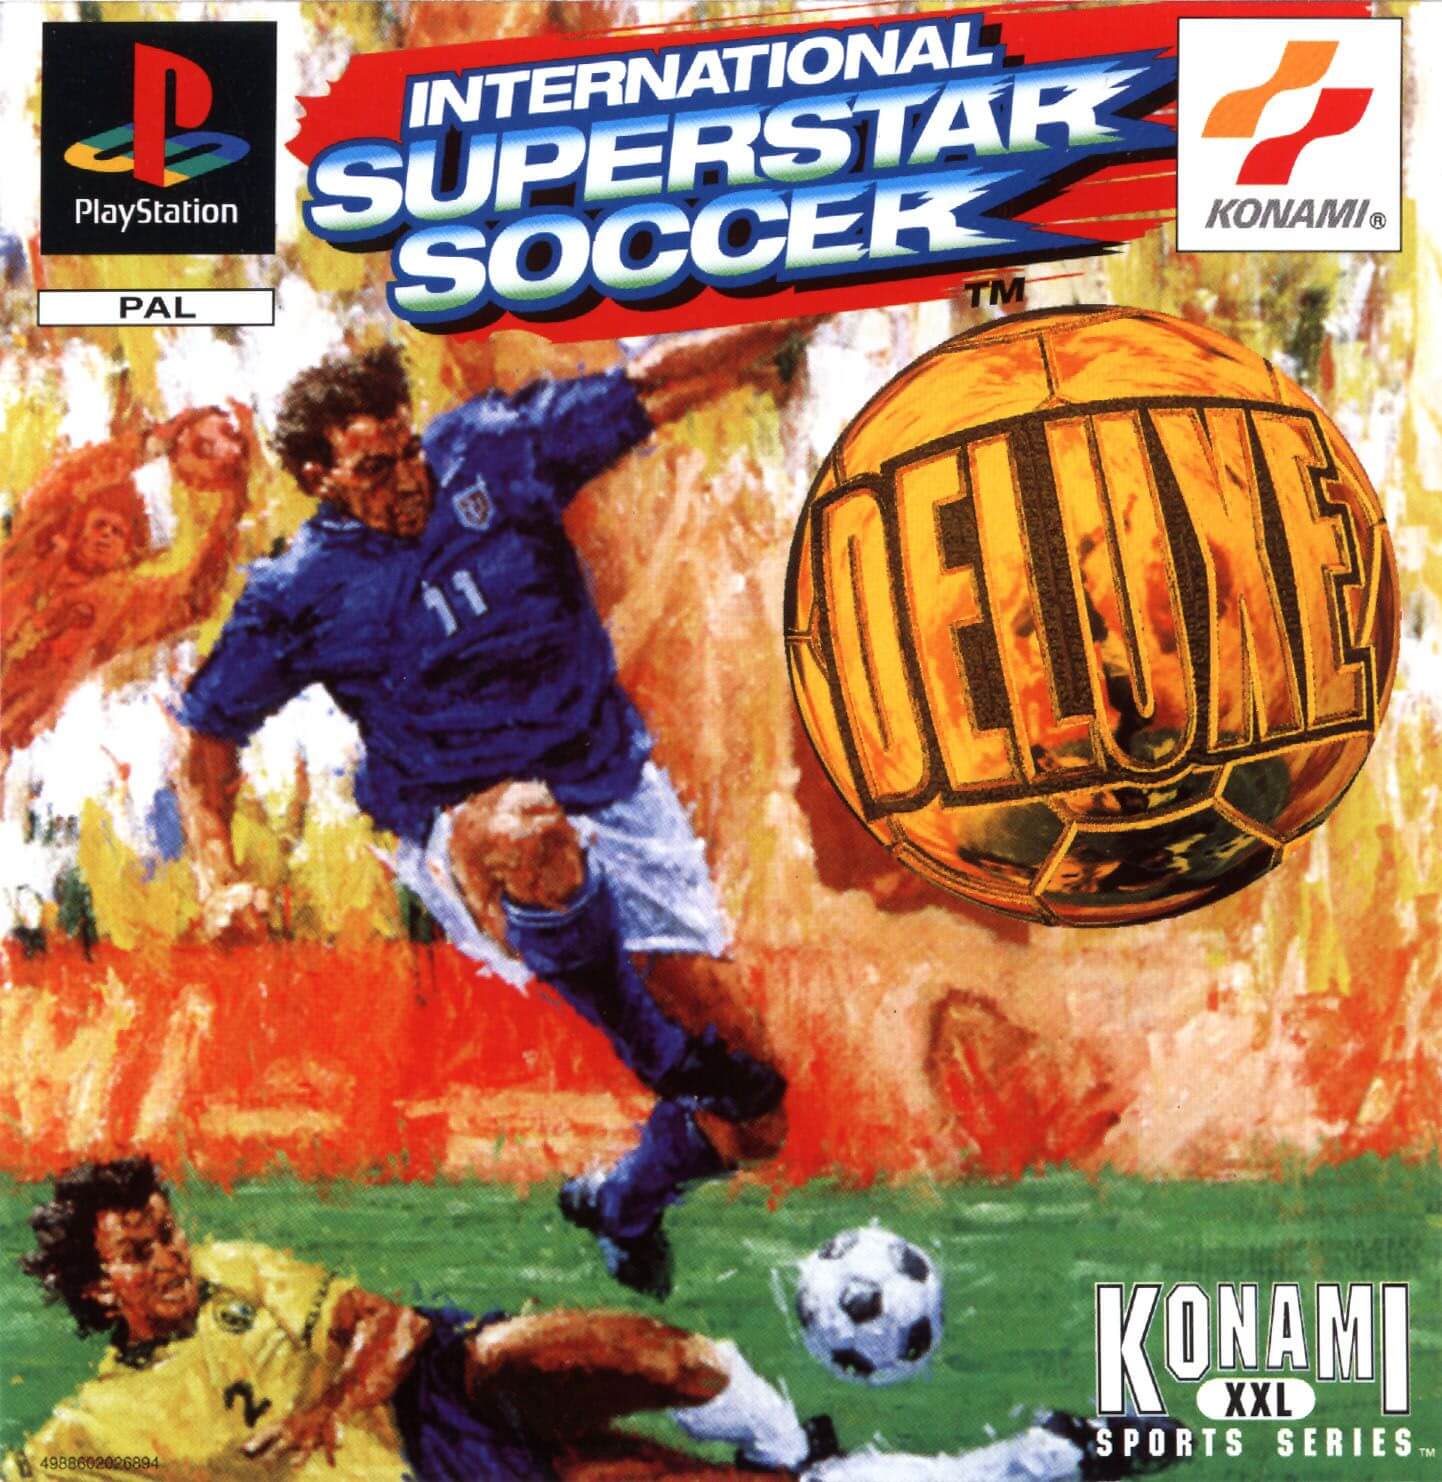 jaquette du jeu vidéo International Superstar Soccer Deluxe